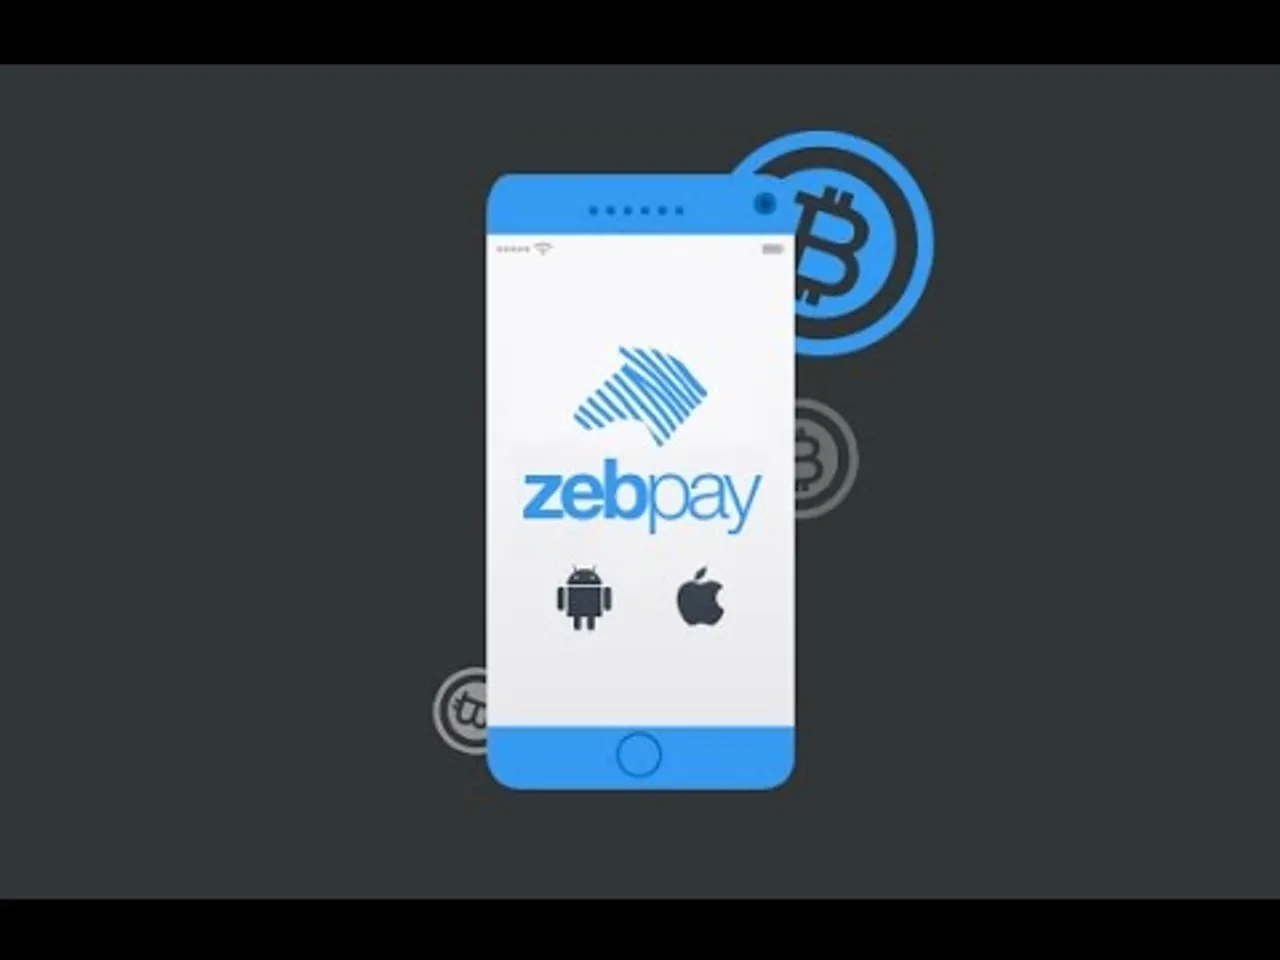 Bitcoin Exchange Zebpay reaches 500,000 downloads mark